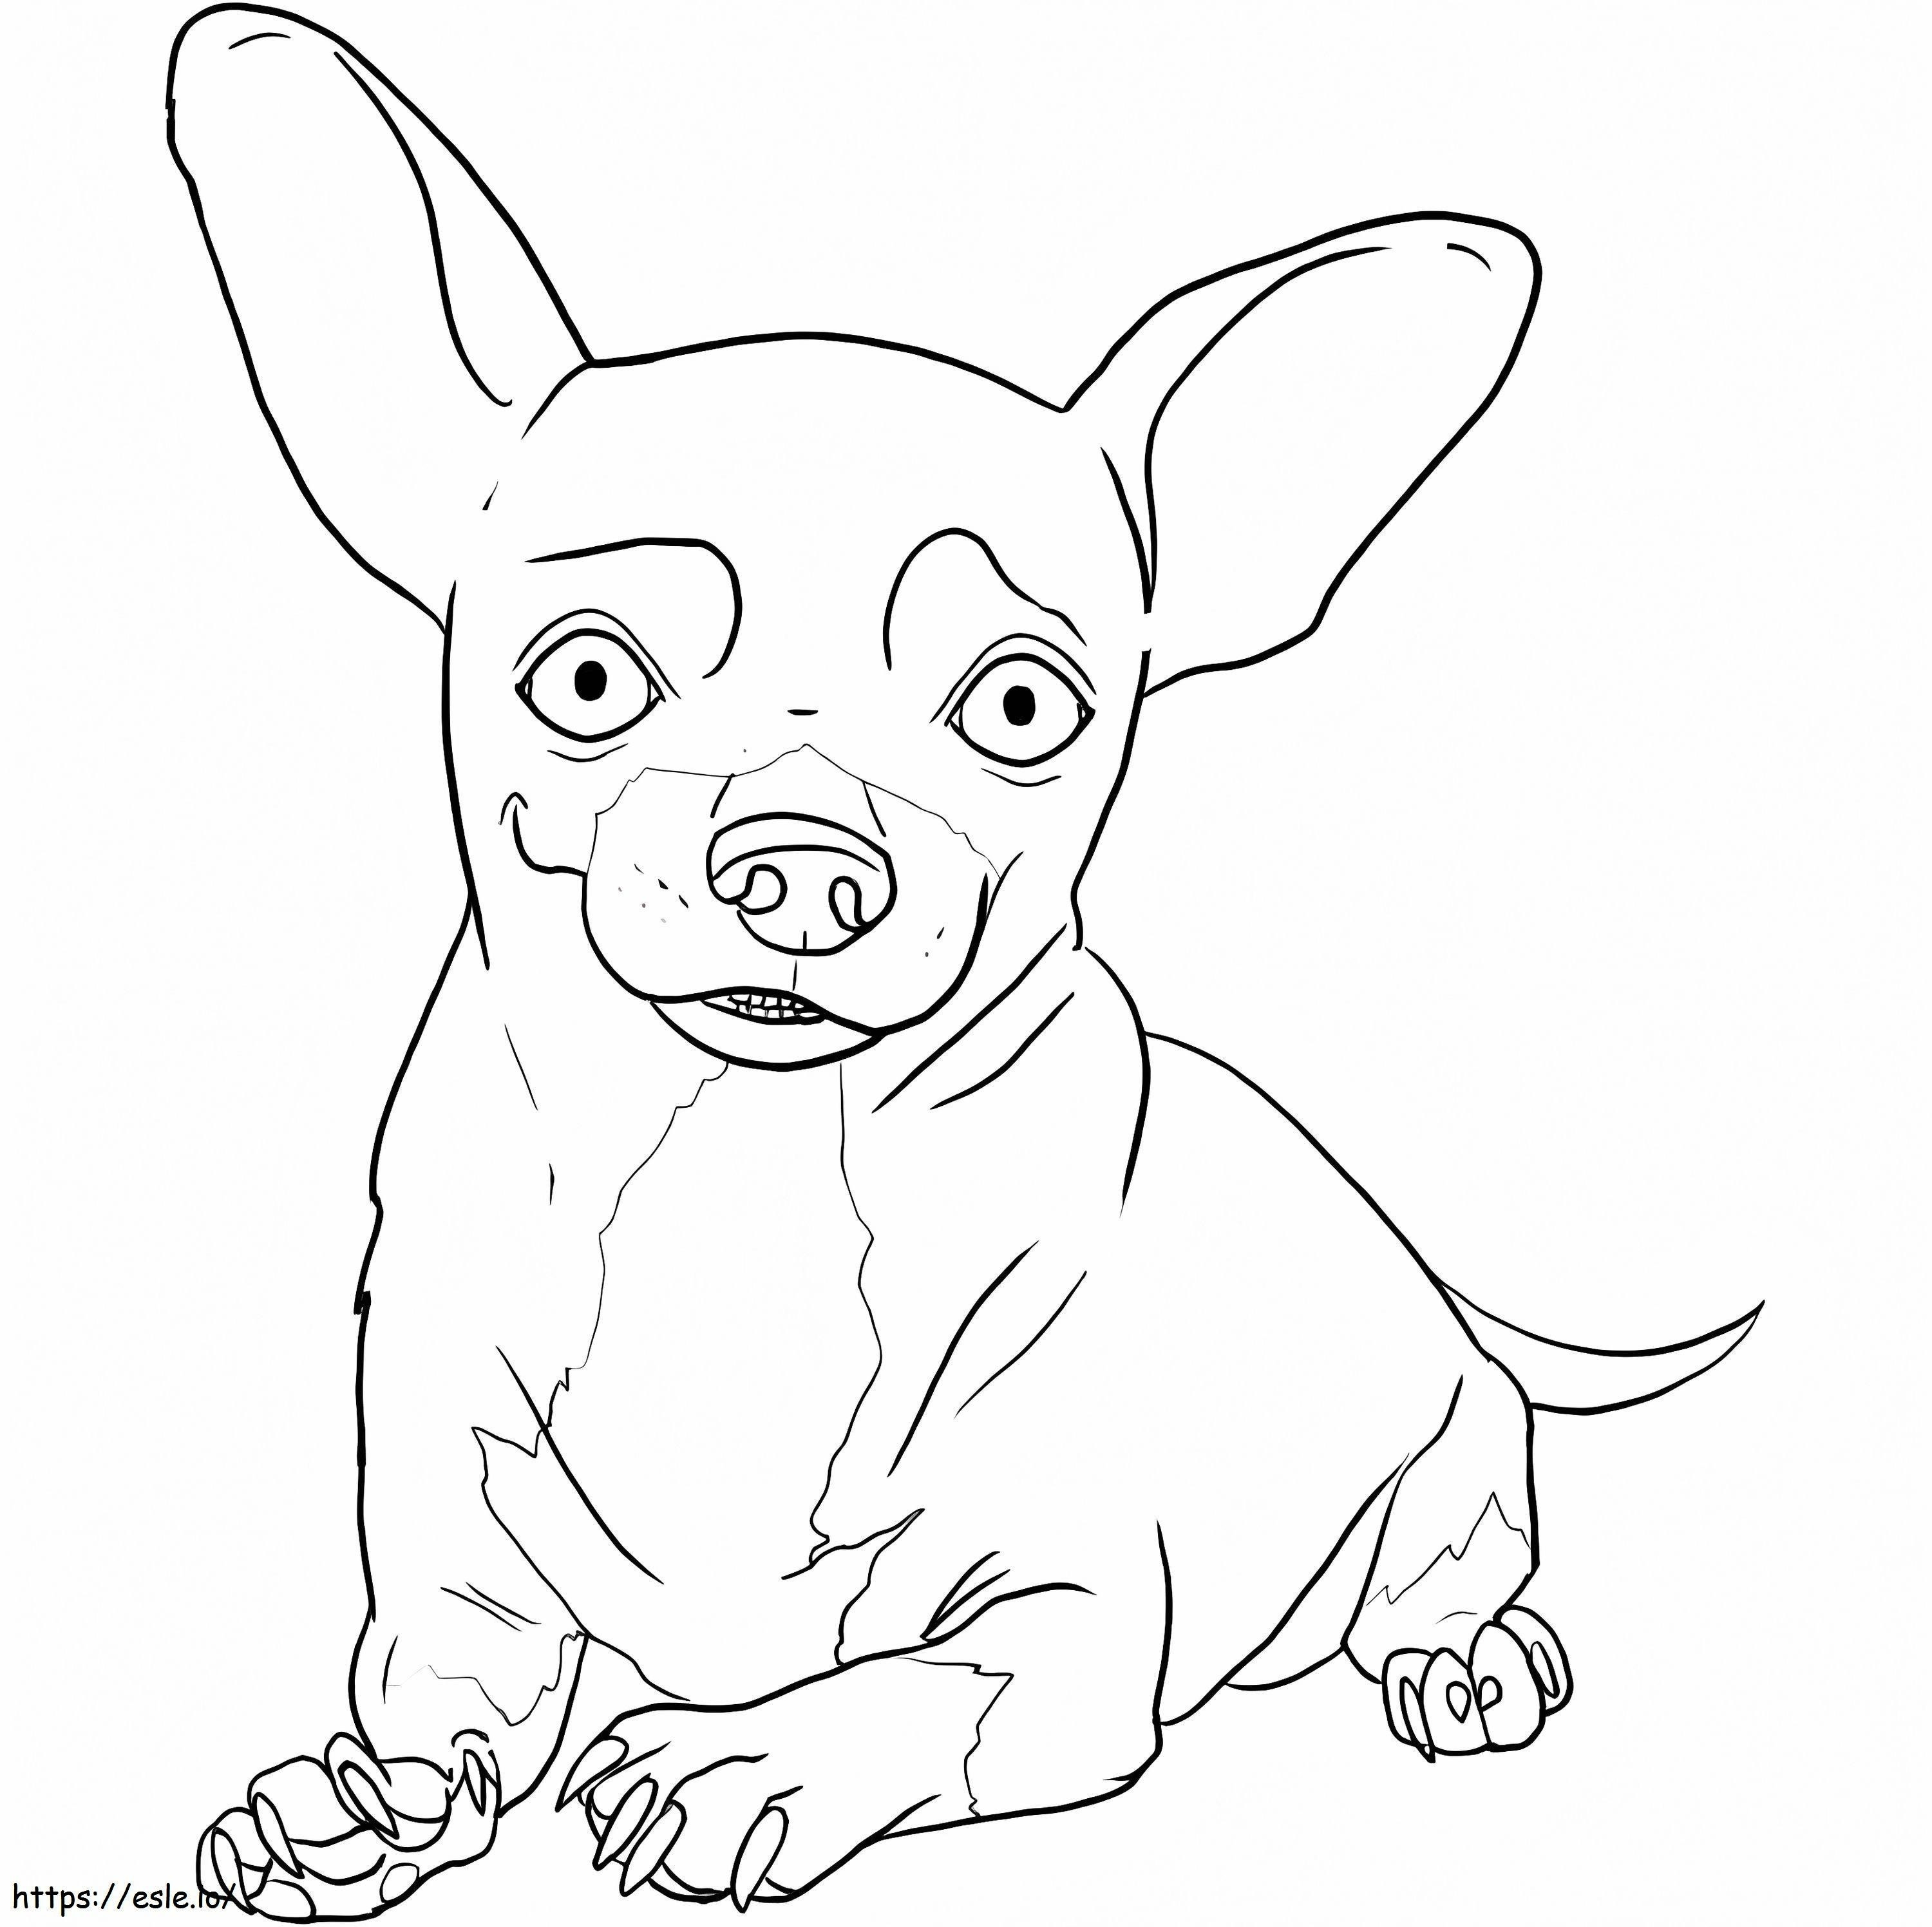 Chihuahua parece divertido para colorir